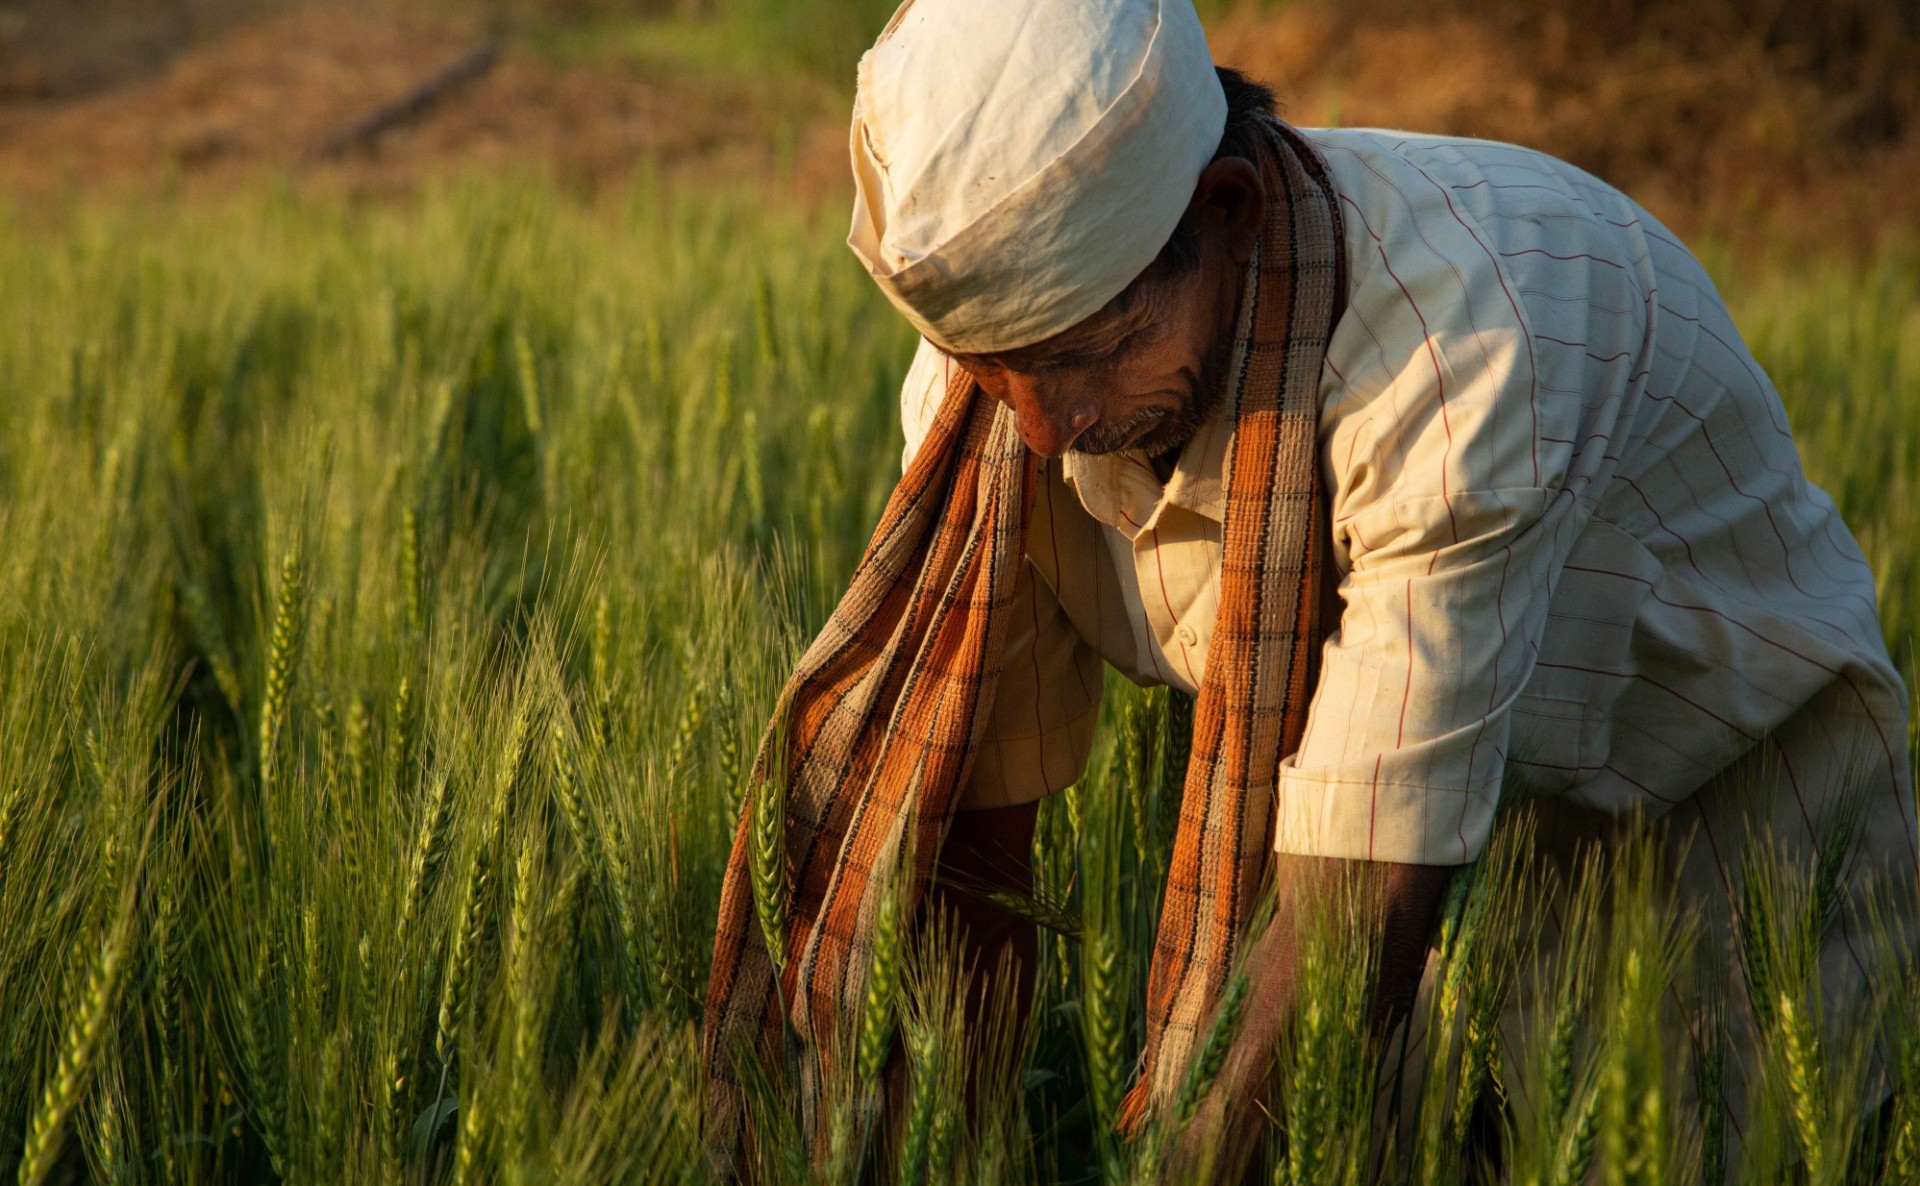 A farmer examines his wheat field at dusk in Jawahar, Maharastra, India. Photo credit Jacquelyn Turner (IRI/CCAFS)